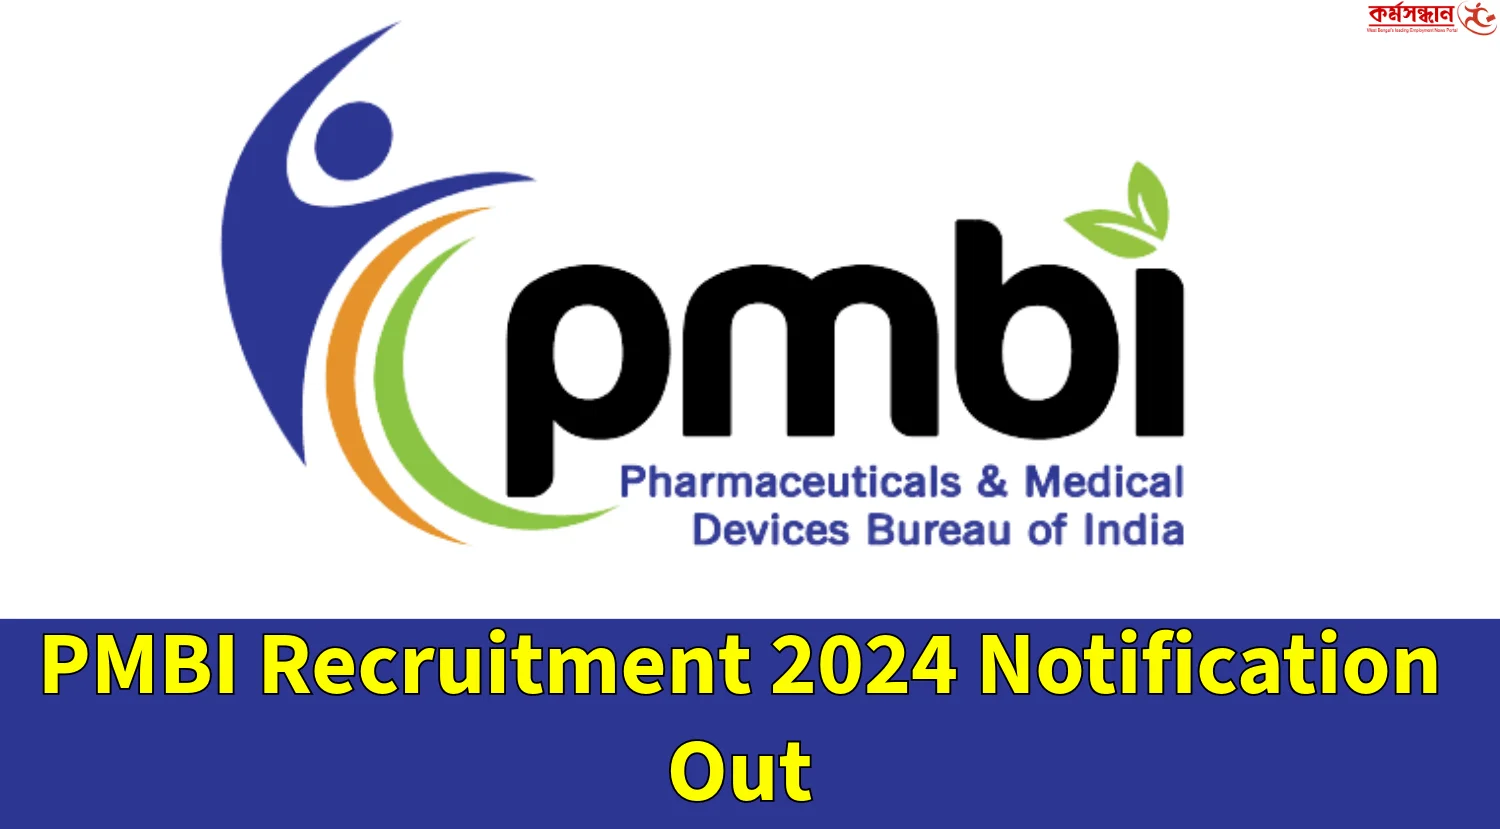 PMBI Recruitment 2024 Notification Out